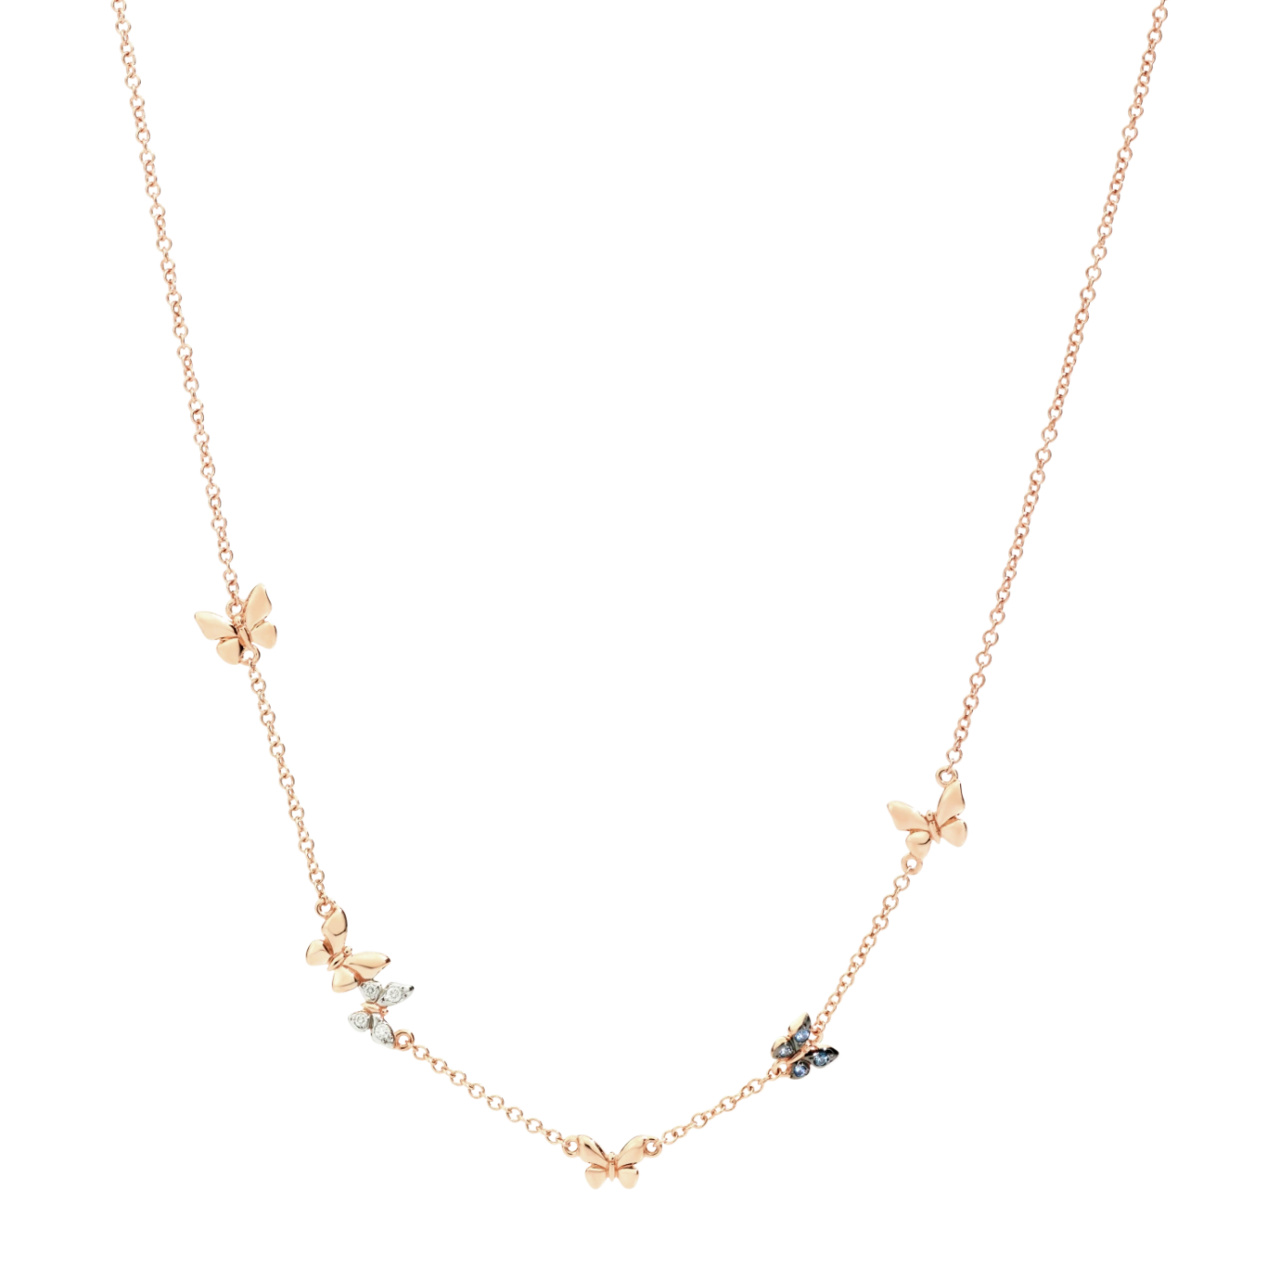 Dodo Schmetterling "Precious" necklace with pendant